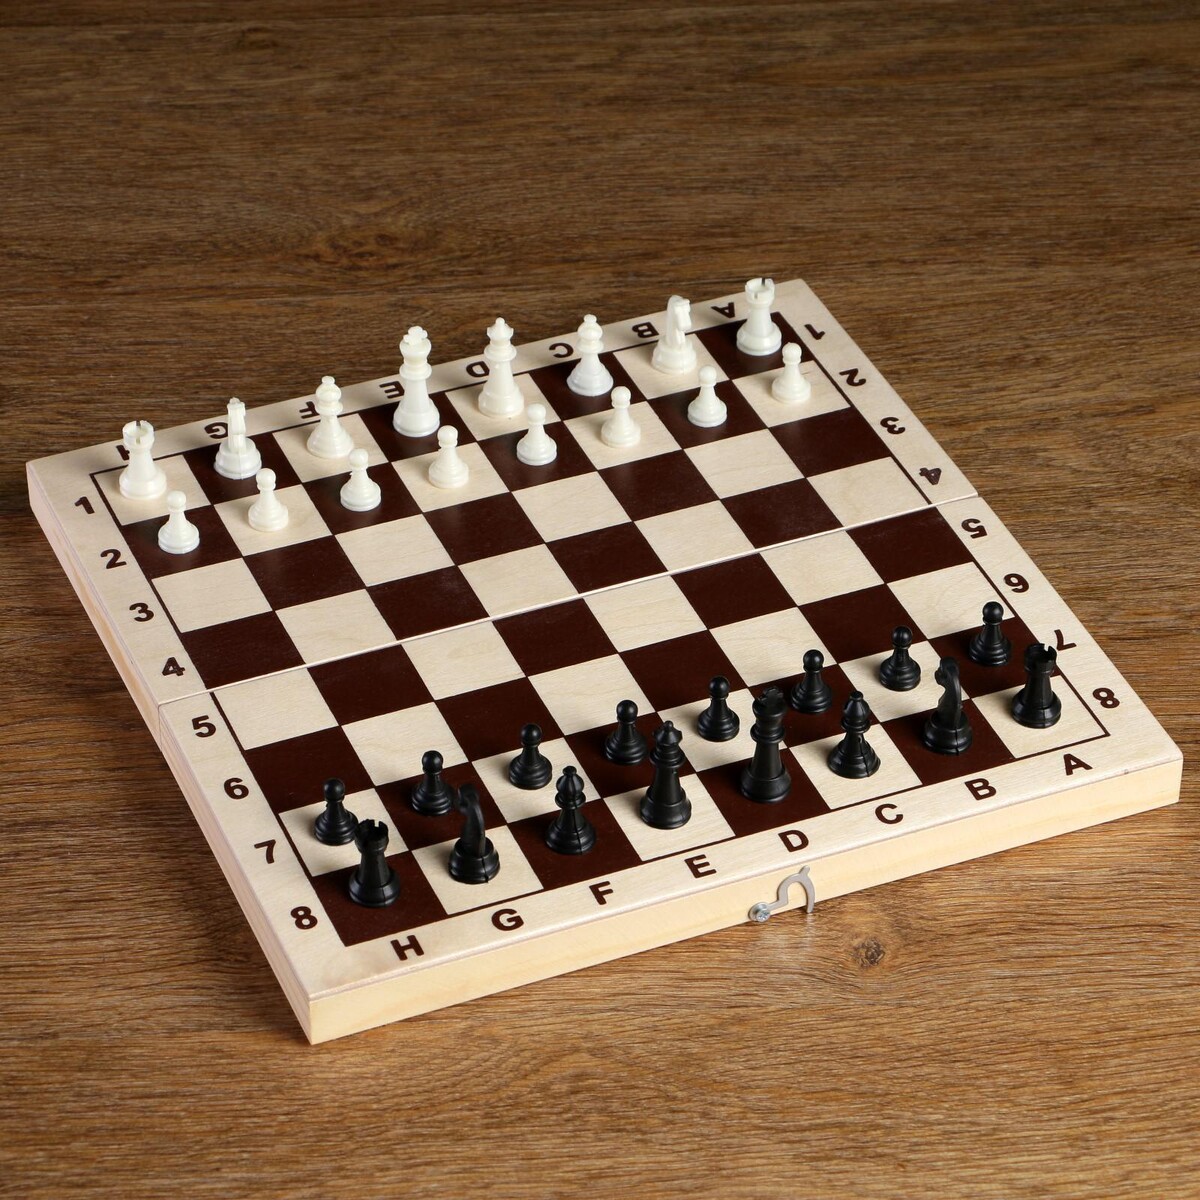 Шахматные фигуры, пластик, король h-4.2 см, пешка h-2 см железный король